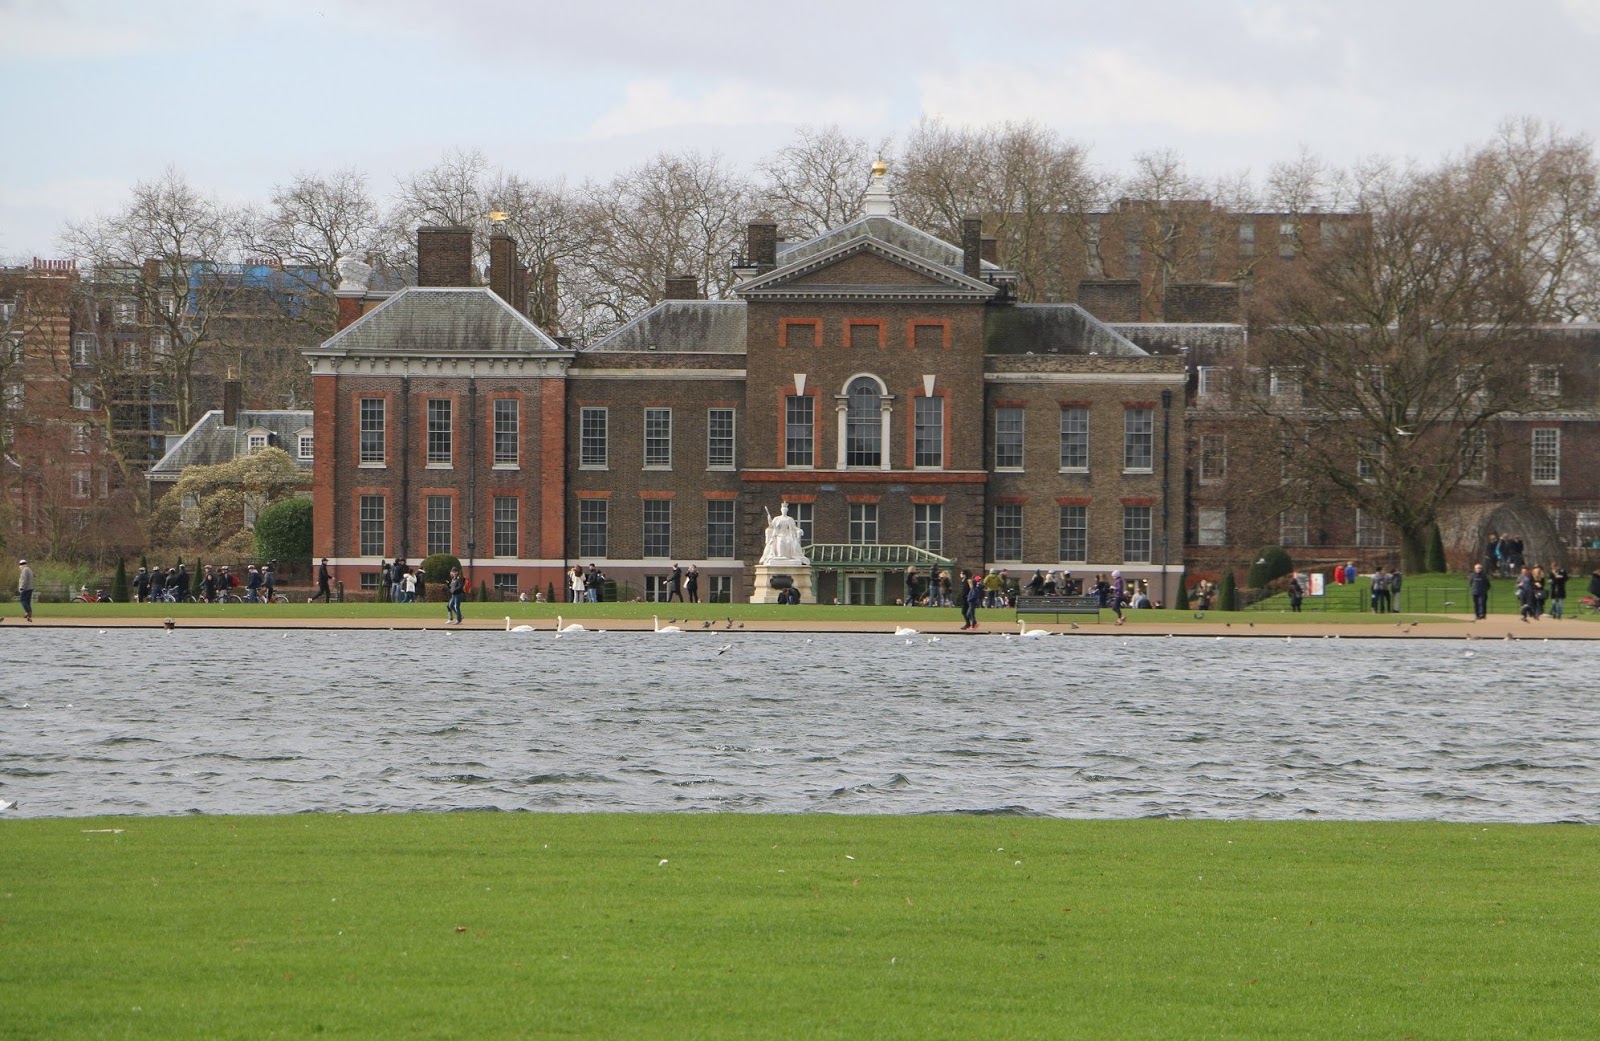 History: Kensington Gardens in London